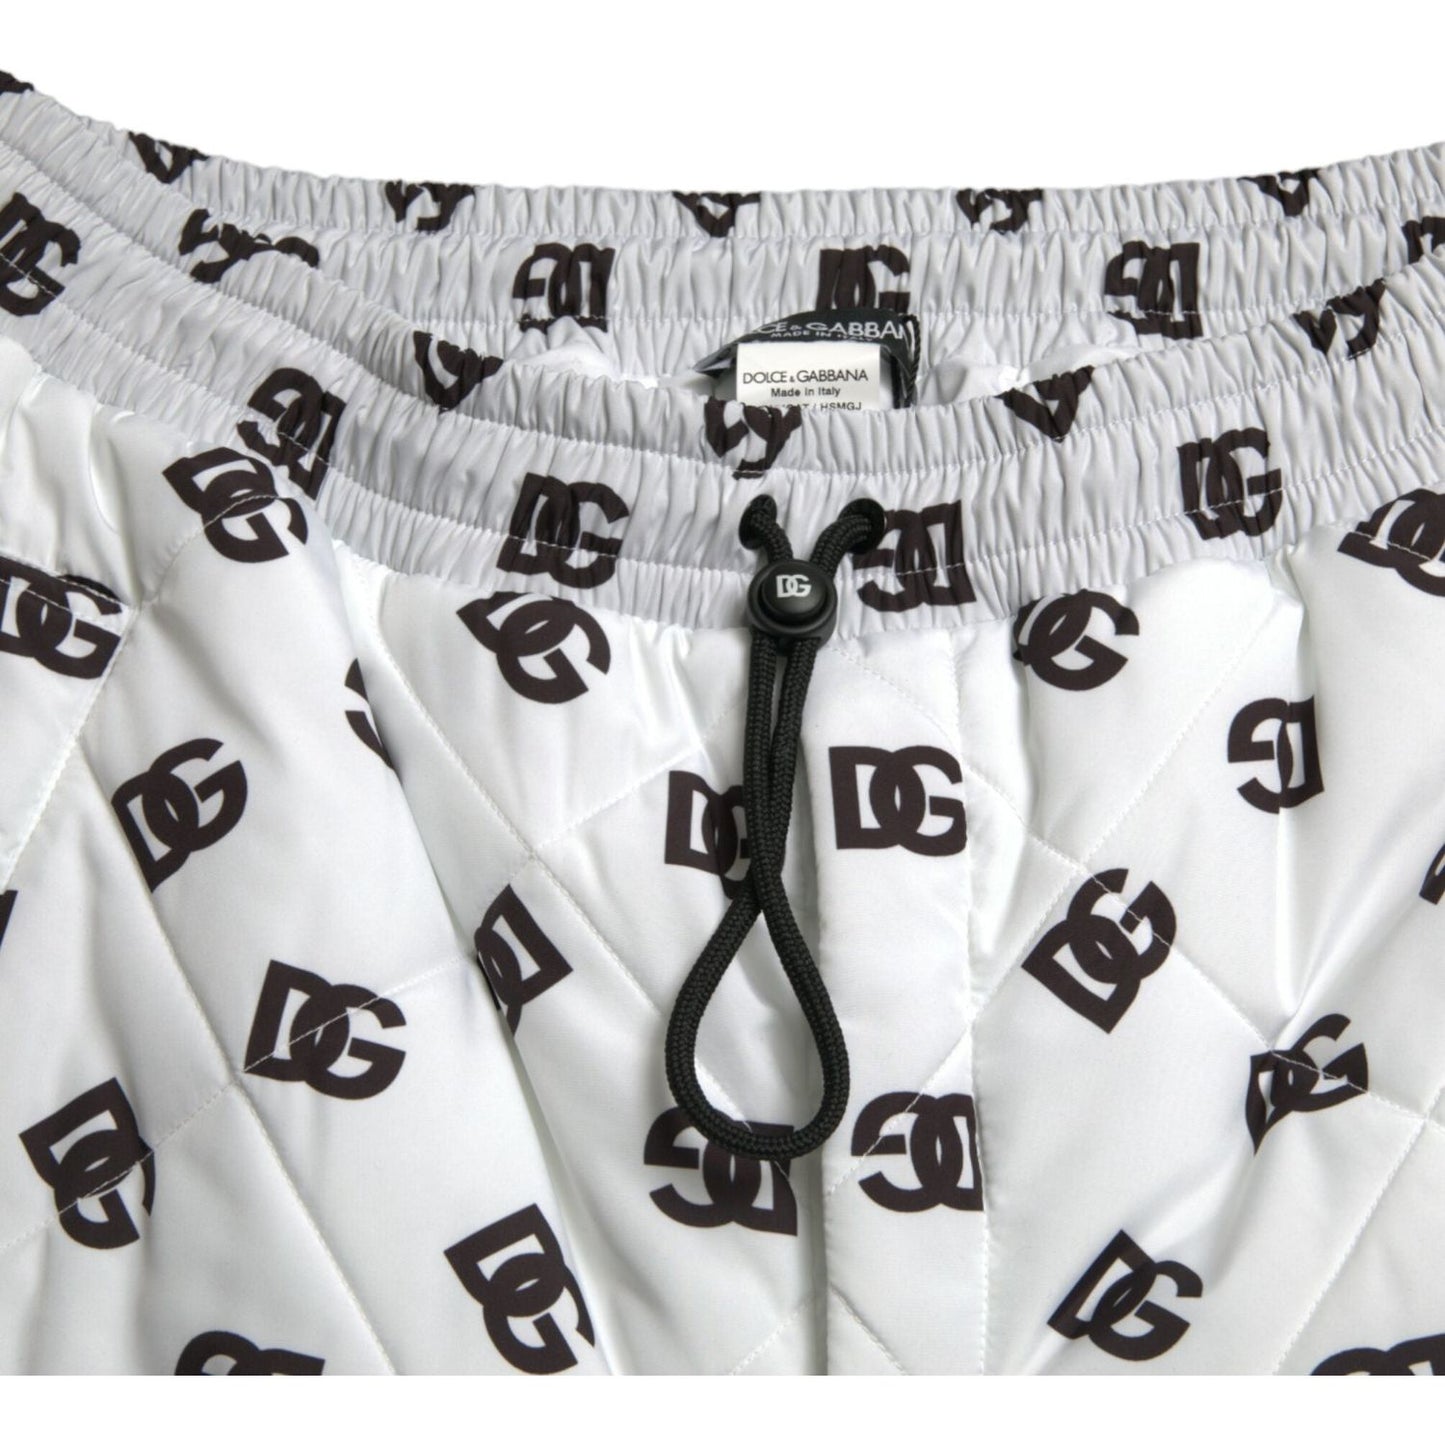 Dolce & Gabbana Chic White Jogger Pants with Iconic DG Print white-logo-dg-print-men-jogger-sweatpants-pants 465A0611-BG-1-scaled-61379940-e65.jpg